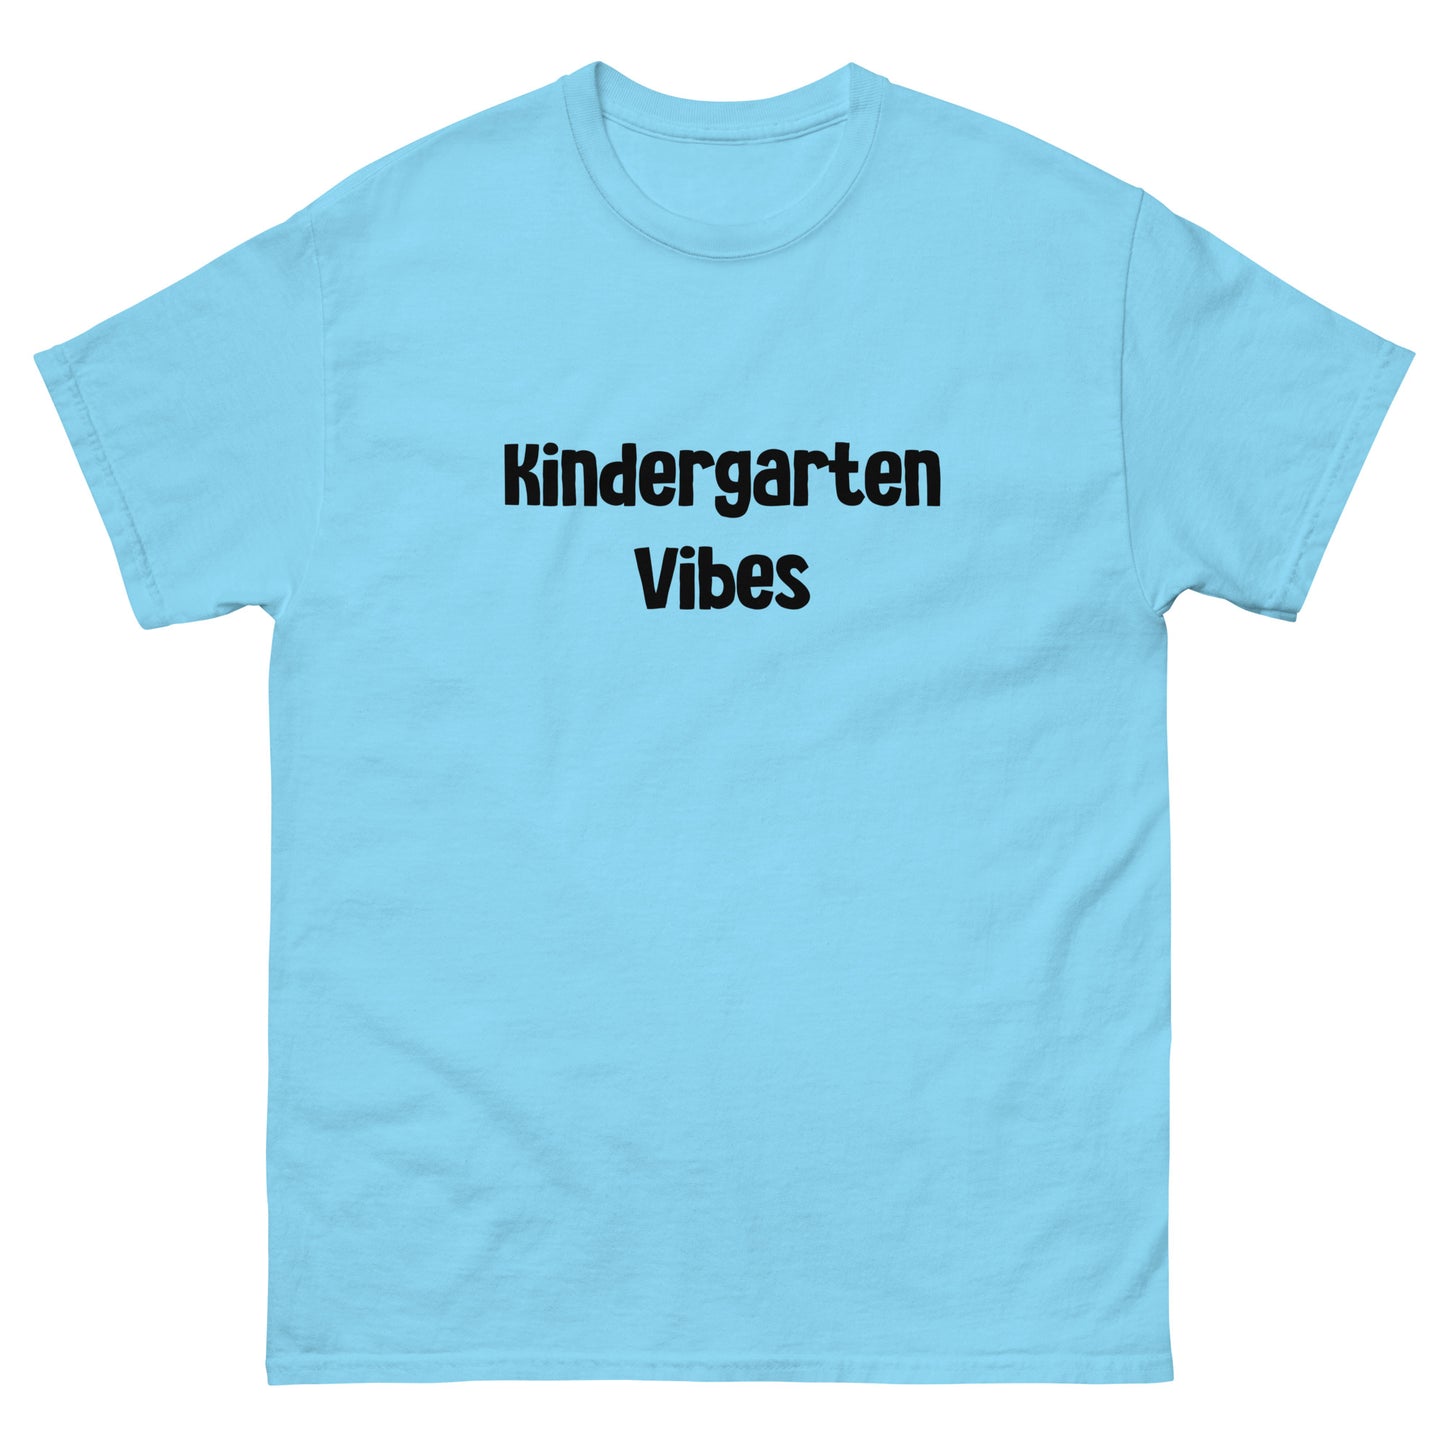 Adult's Kindergarten Vibes T Shirts